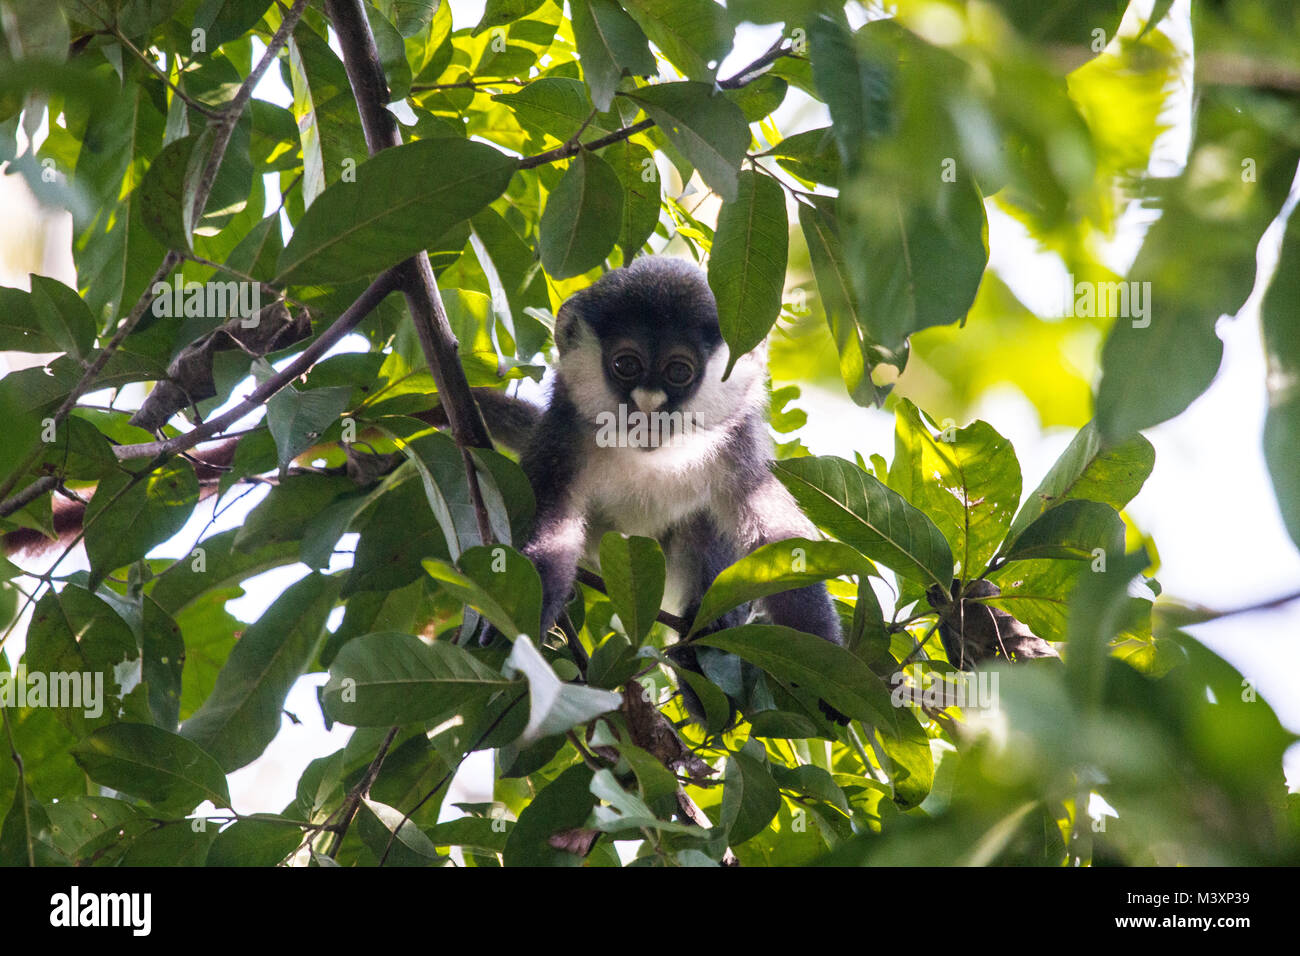 Red-tailed monkey (Cercopithecus ascanius) in una struttura ad albero in Uganda. Foto Stock